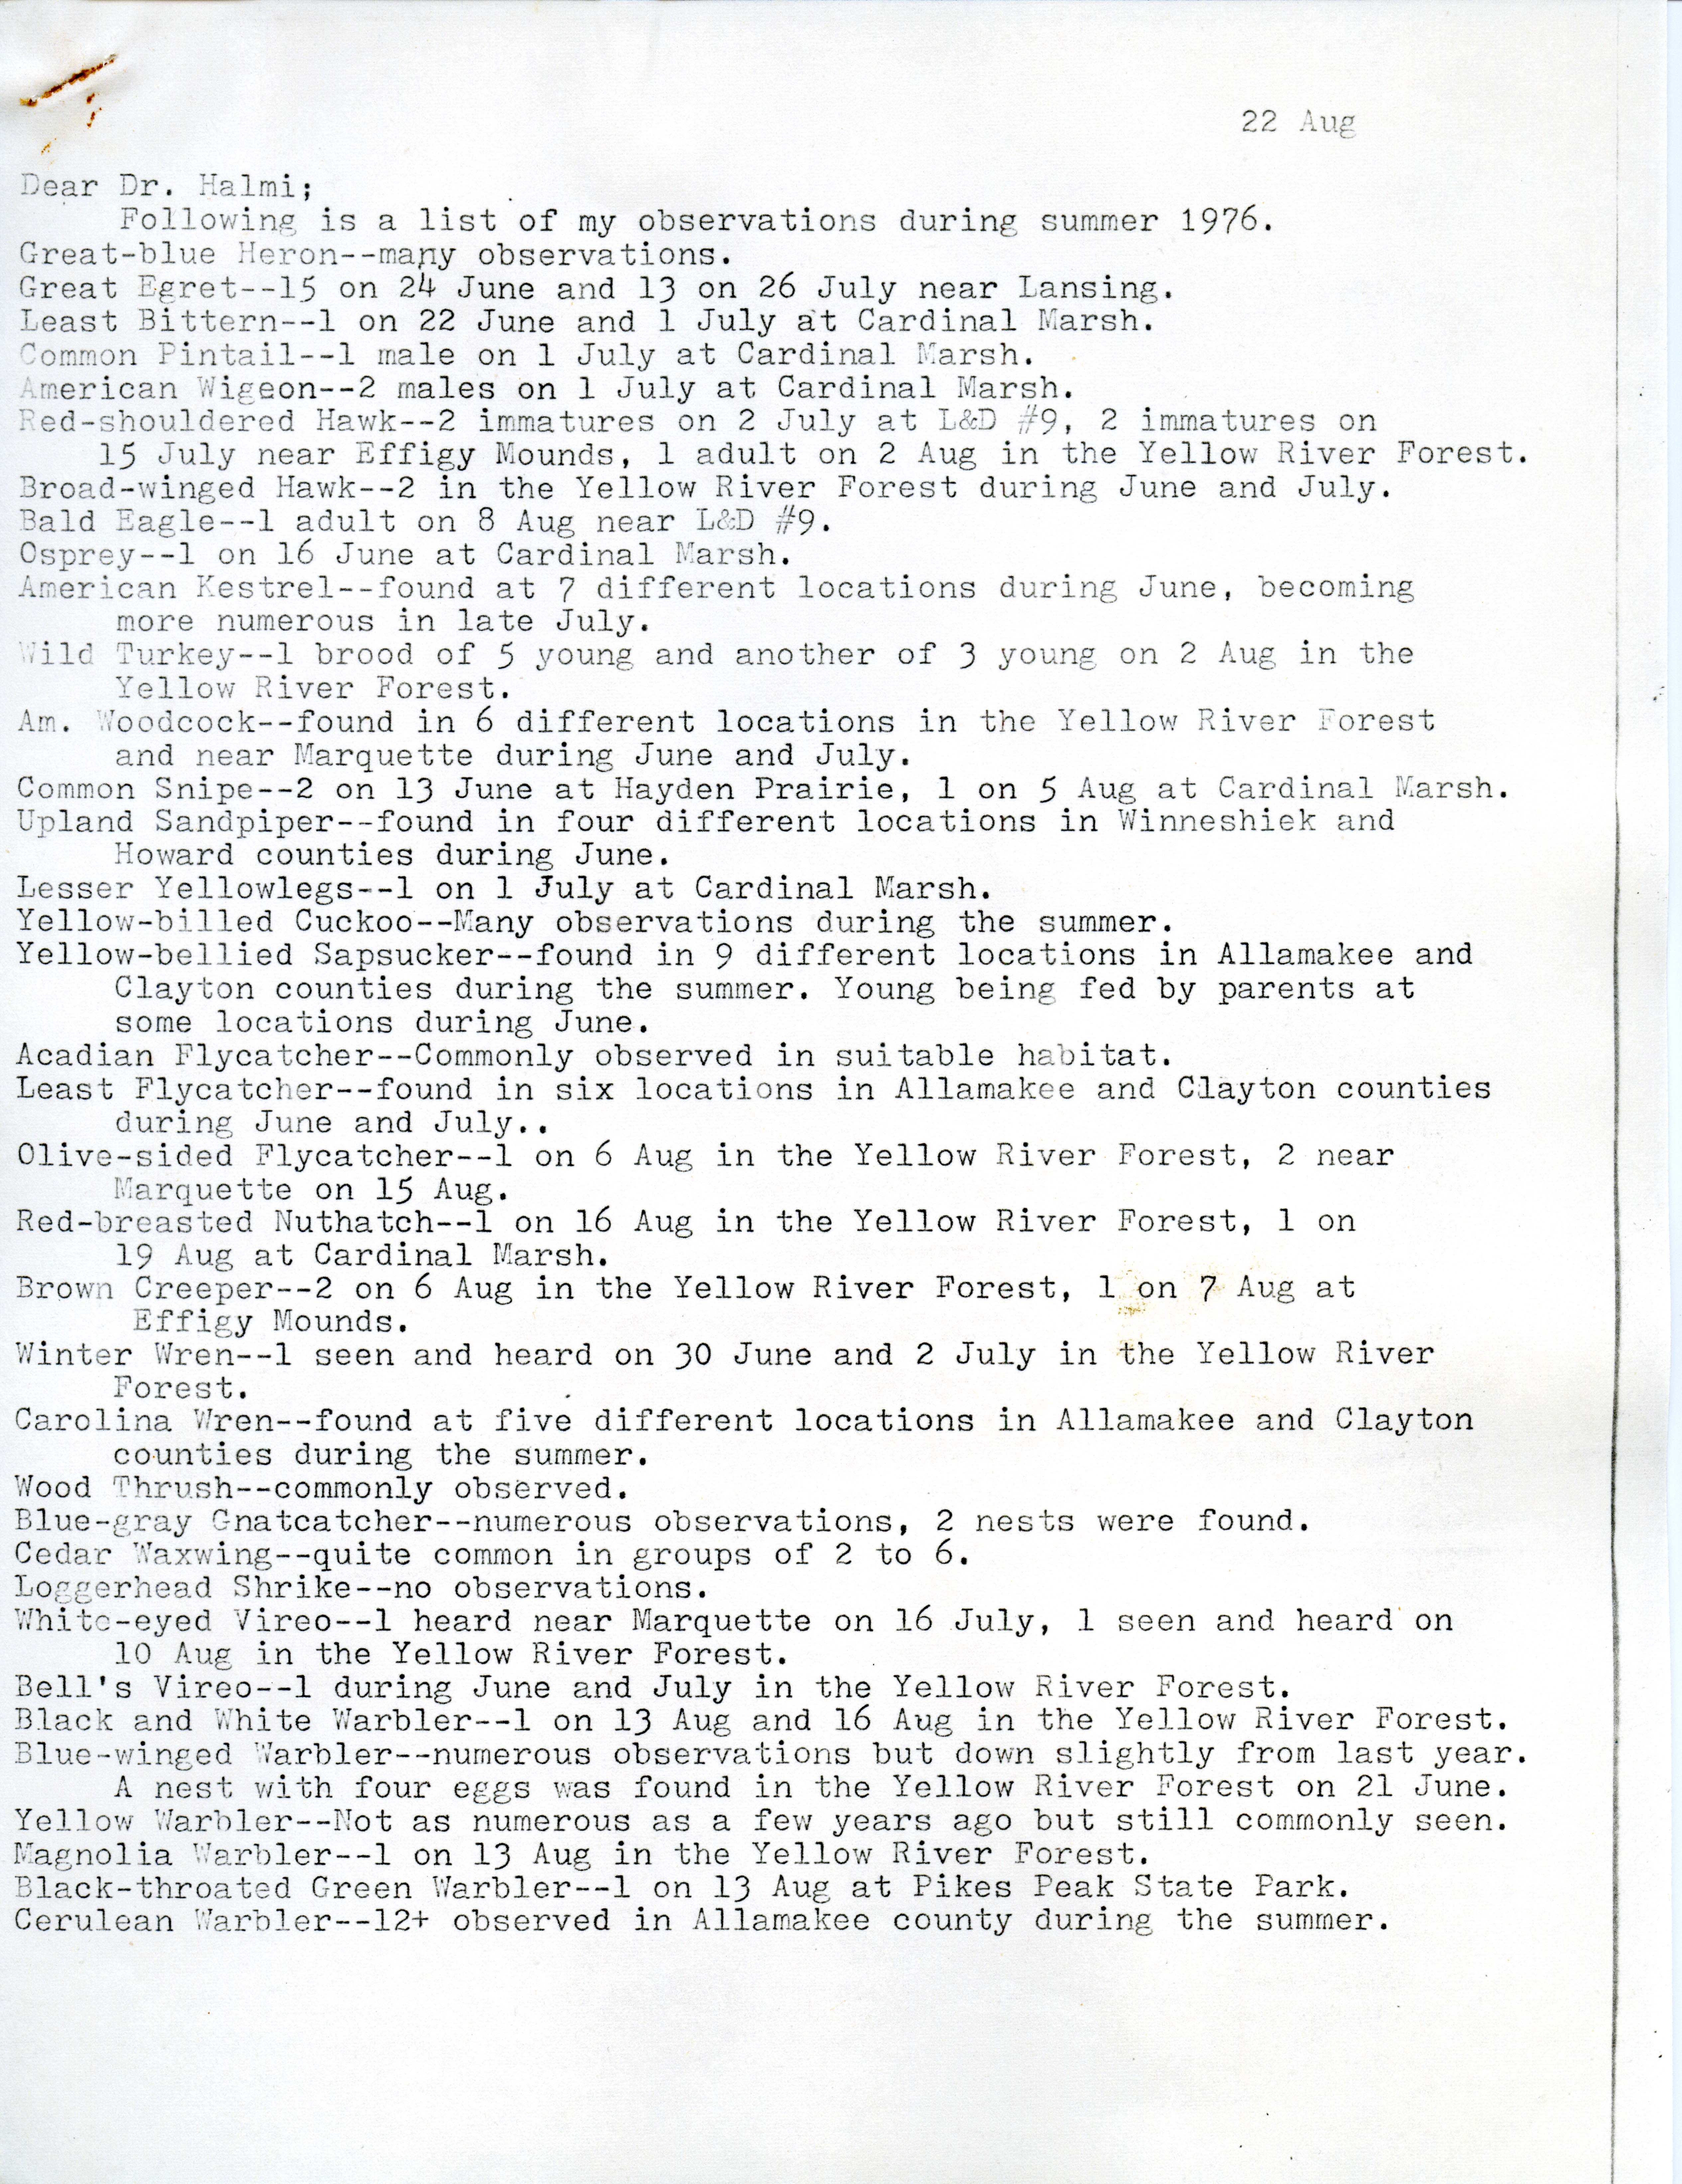 Letter from Darwin Koenig to Nicholas Halmi regarding bird sightings, August 22, 1976